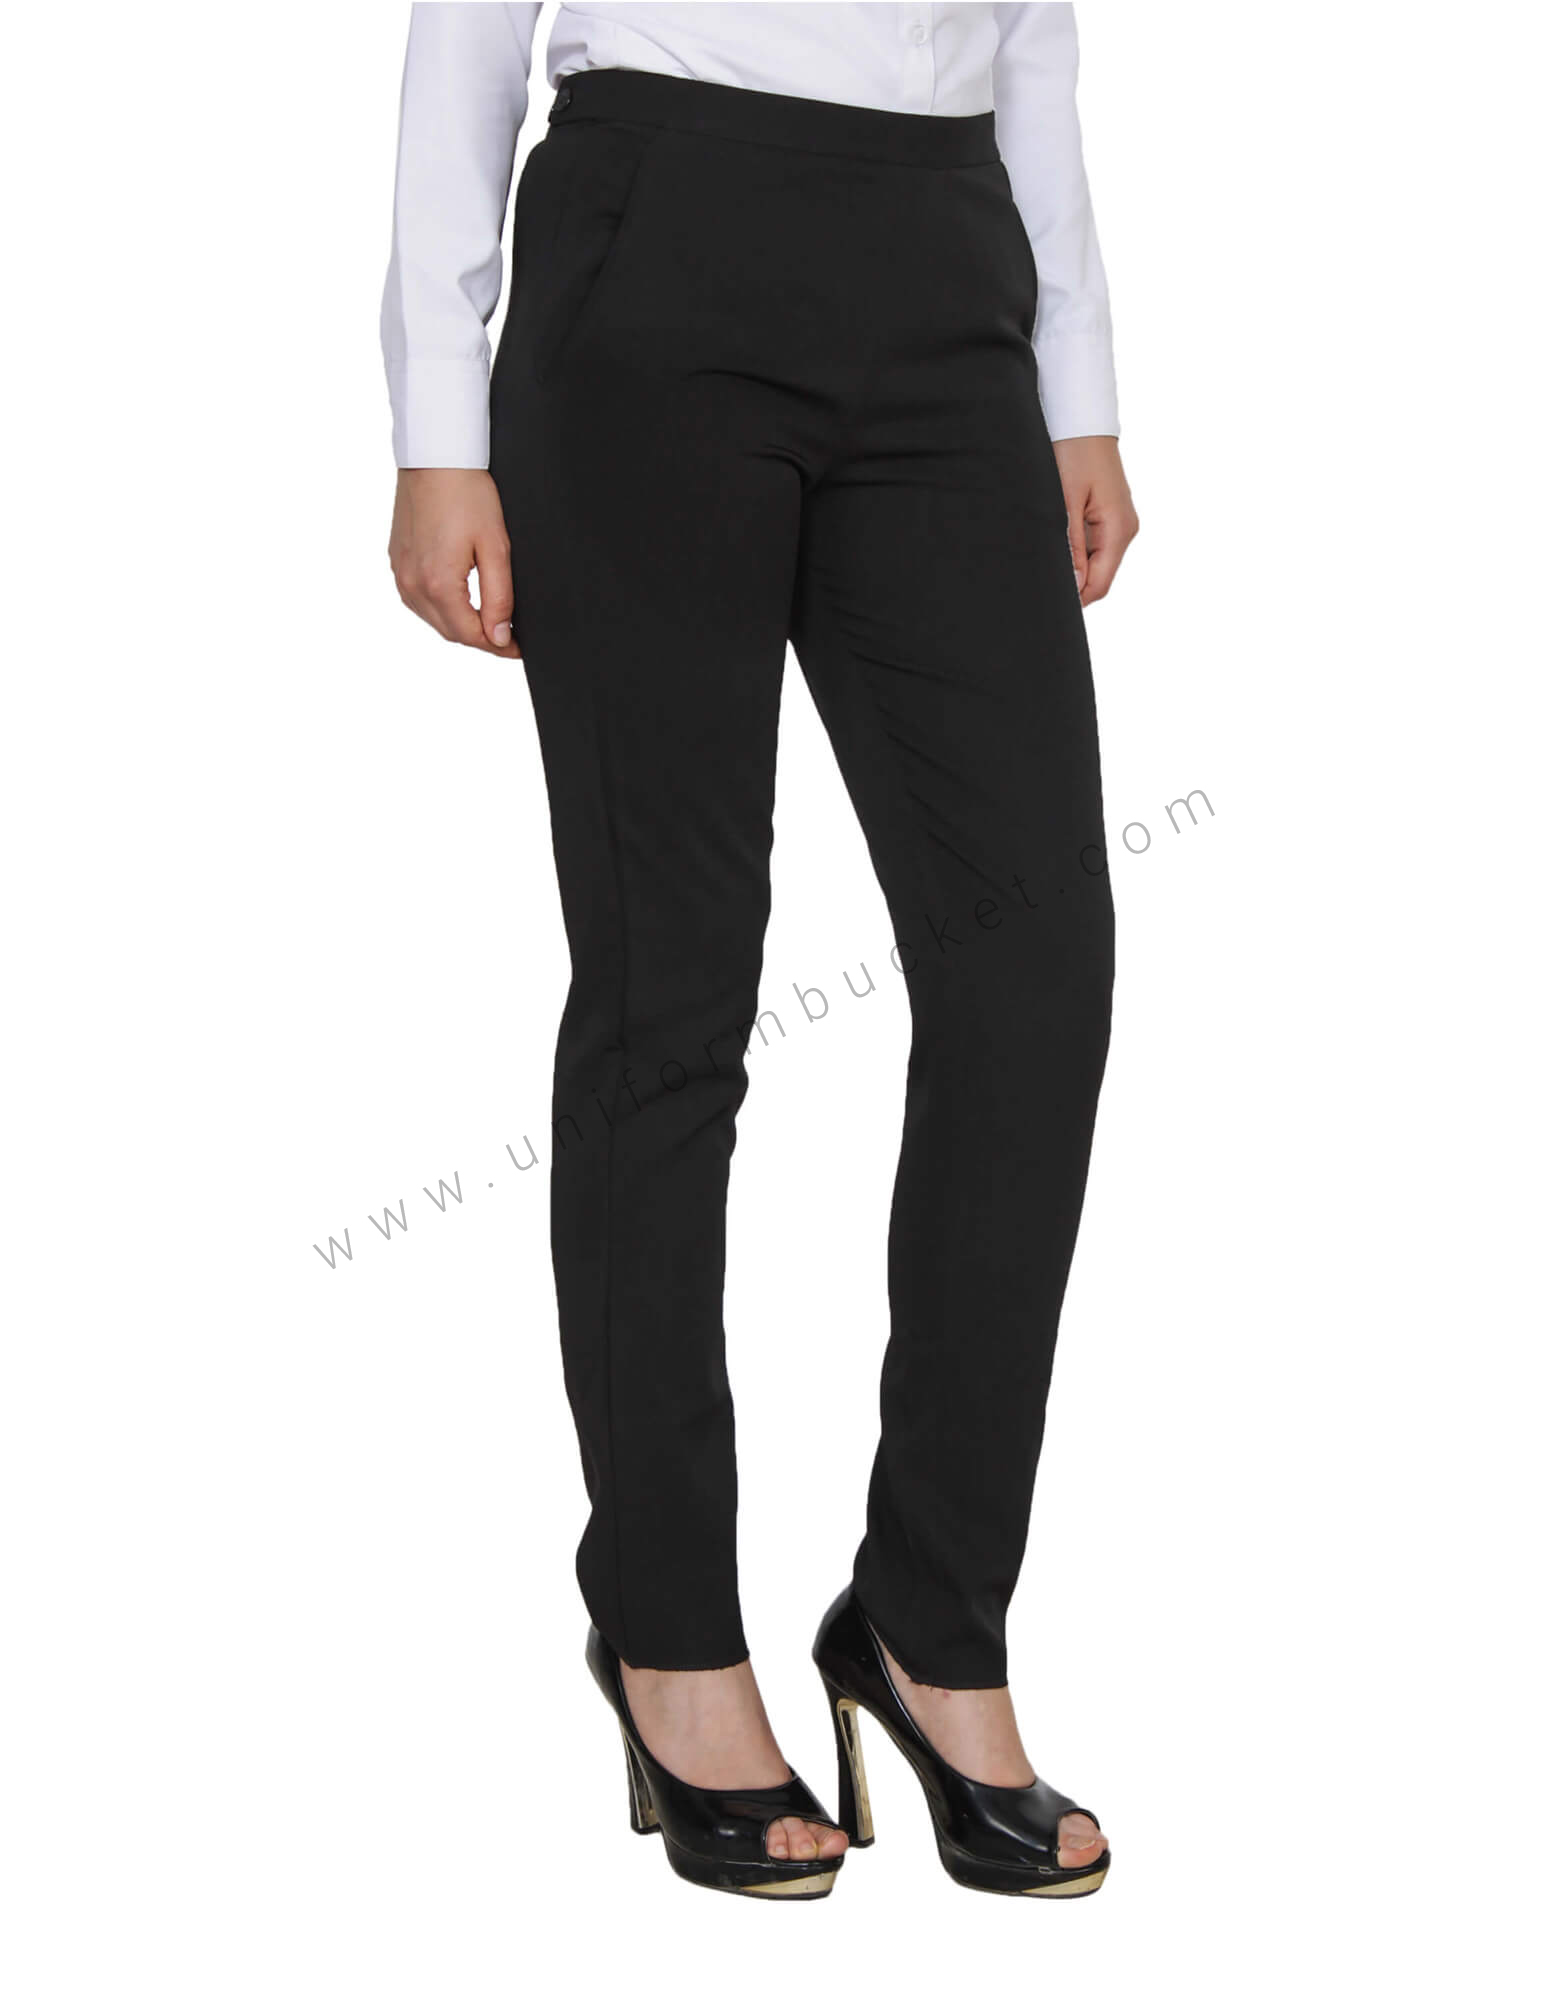 Buy Black High Waist Formal Pants Online  Fablestreet